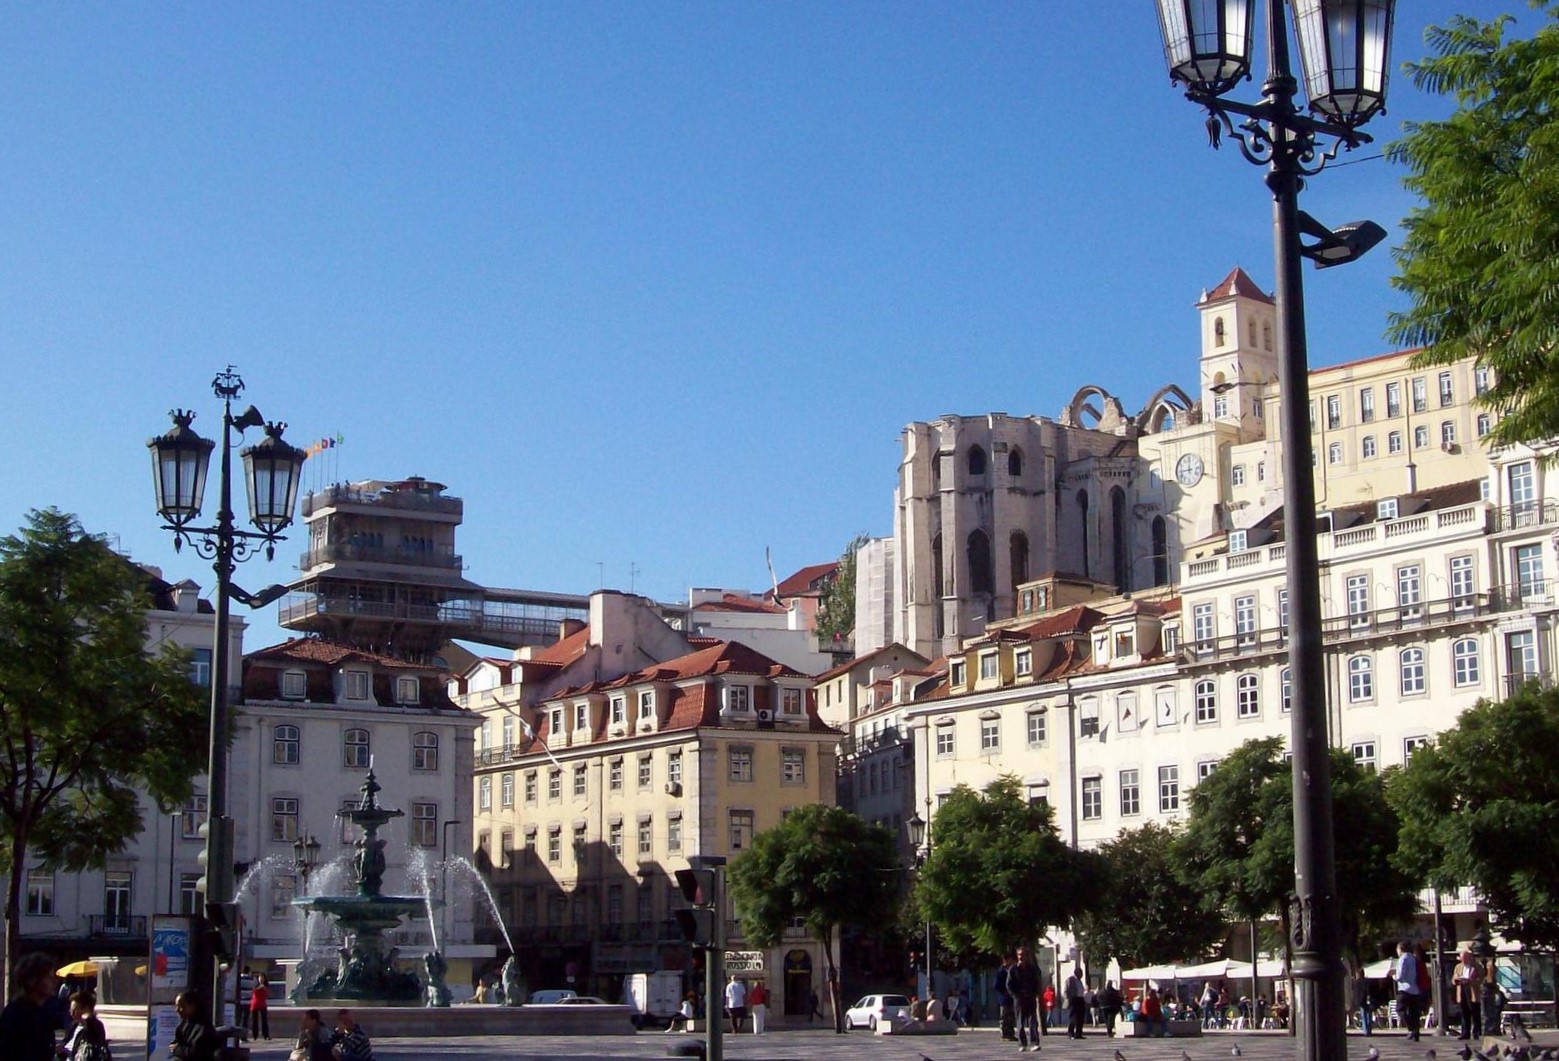 Lissabon Portugal